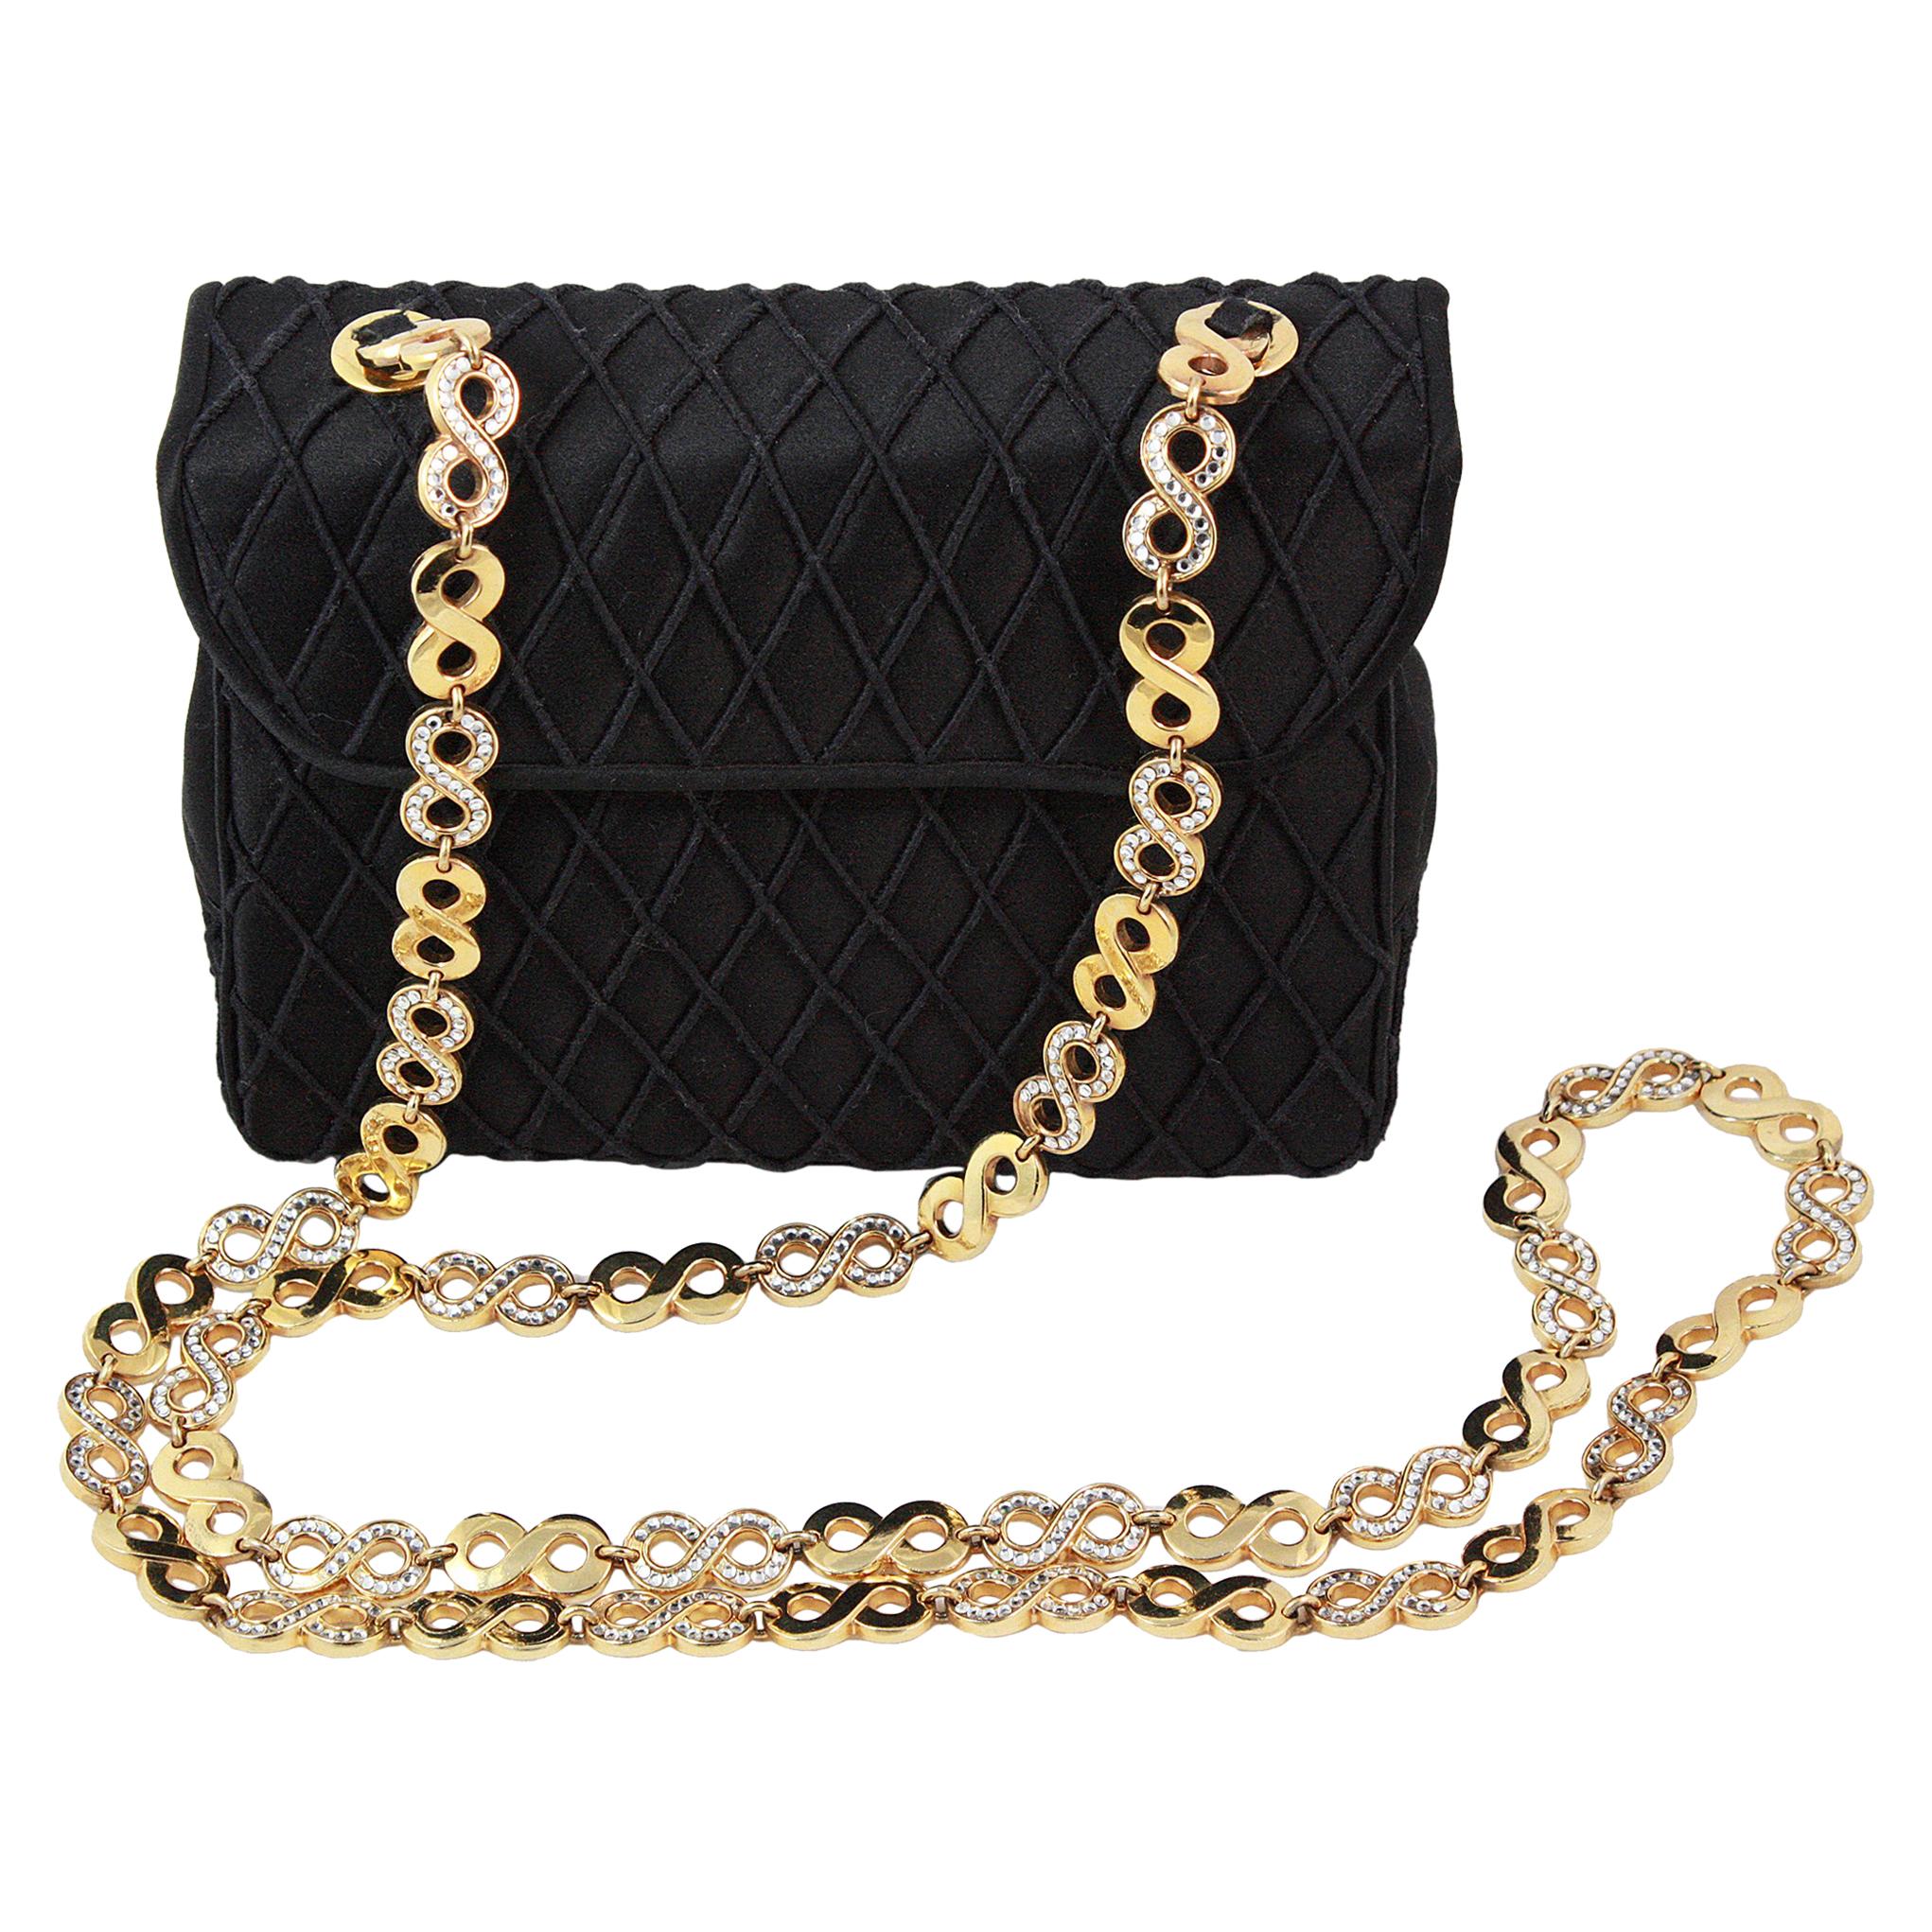 Judith Leiber Black Satin Crossbody Bag with Gold Infinity Chain